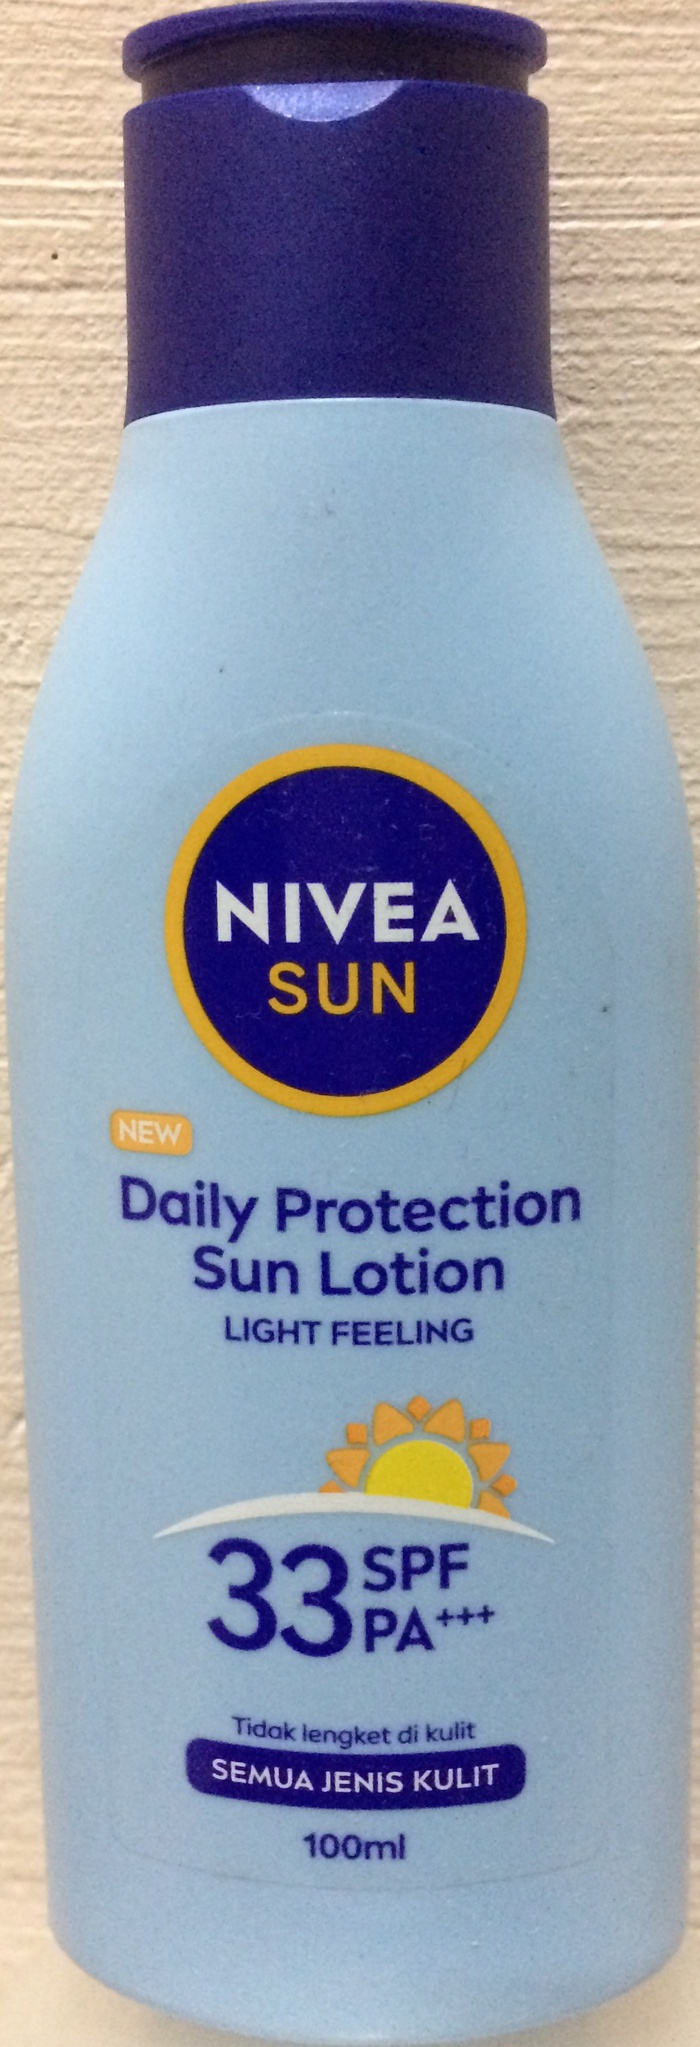 Nivea Daily Protection Sun Lotion SPF 33 PA +++ (New)